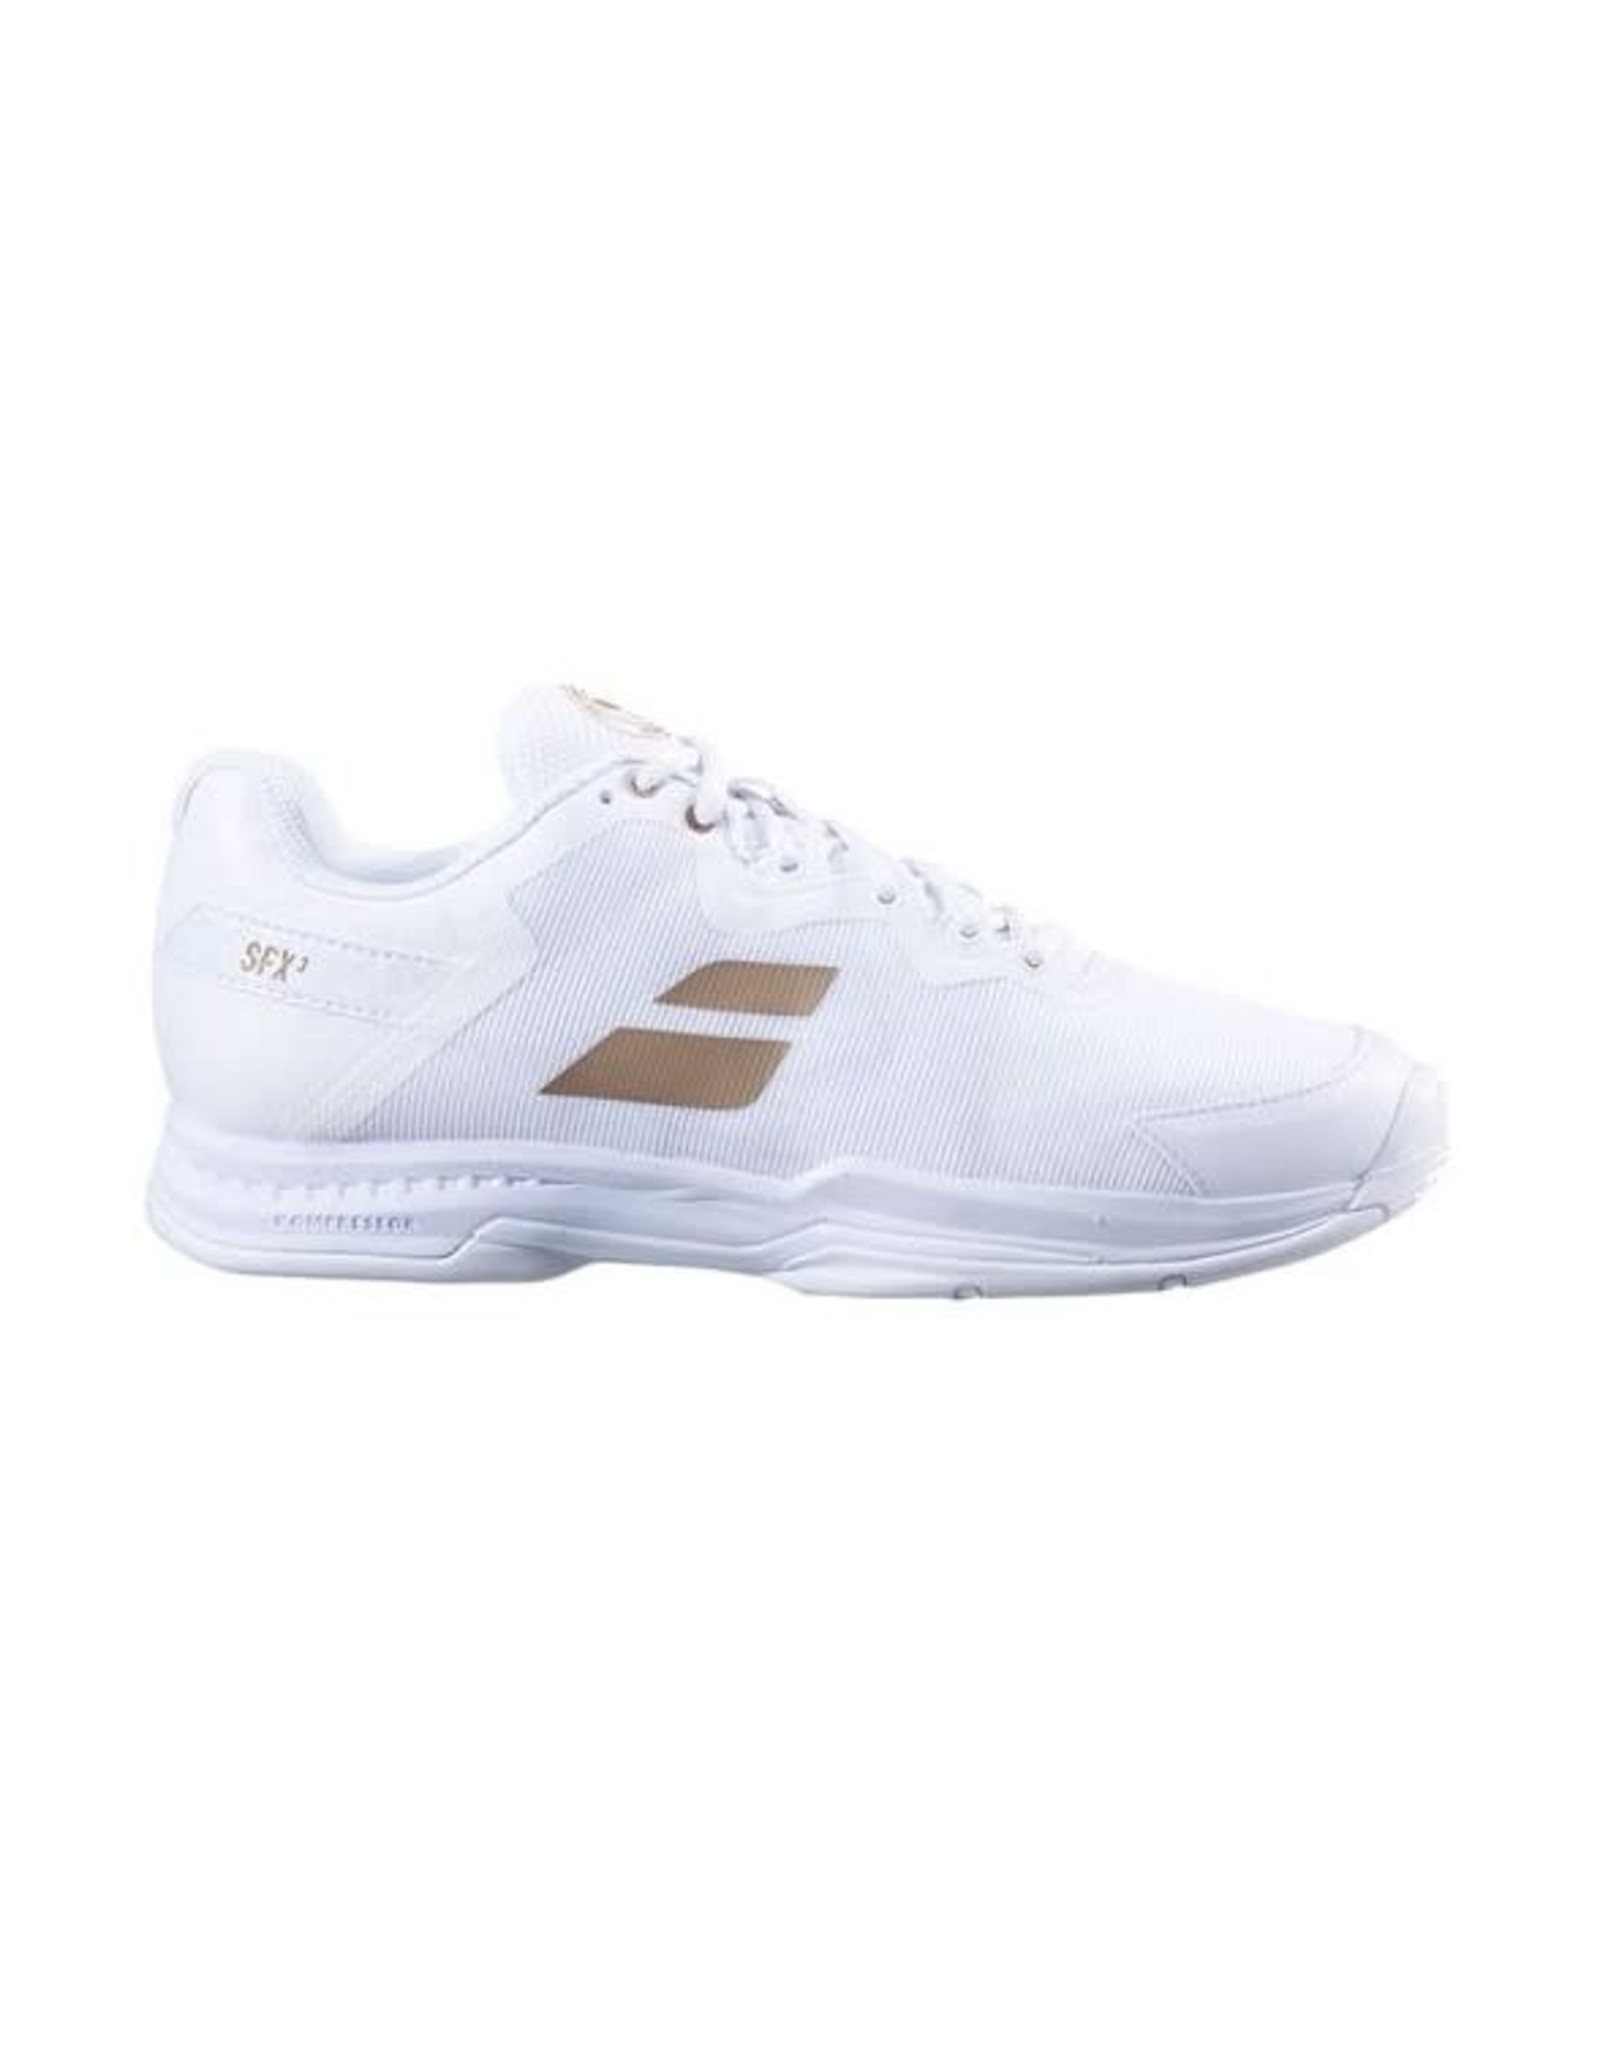 Babolat Babolat Men's SFX3 AC Wimbledon (White/Gold) Tennis Shoe